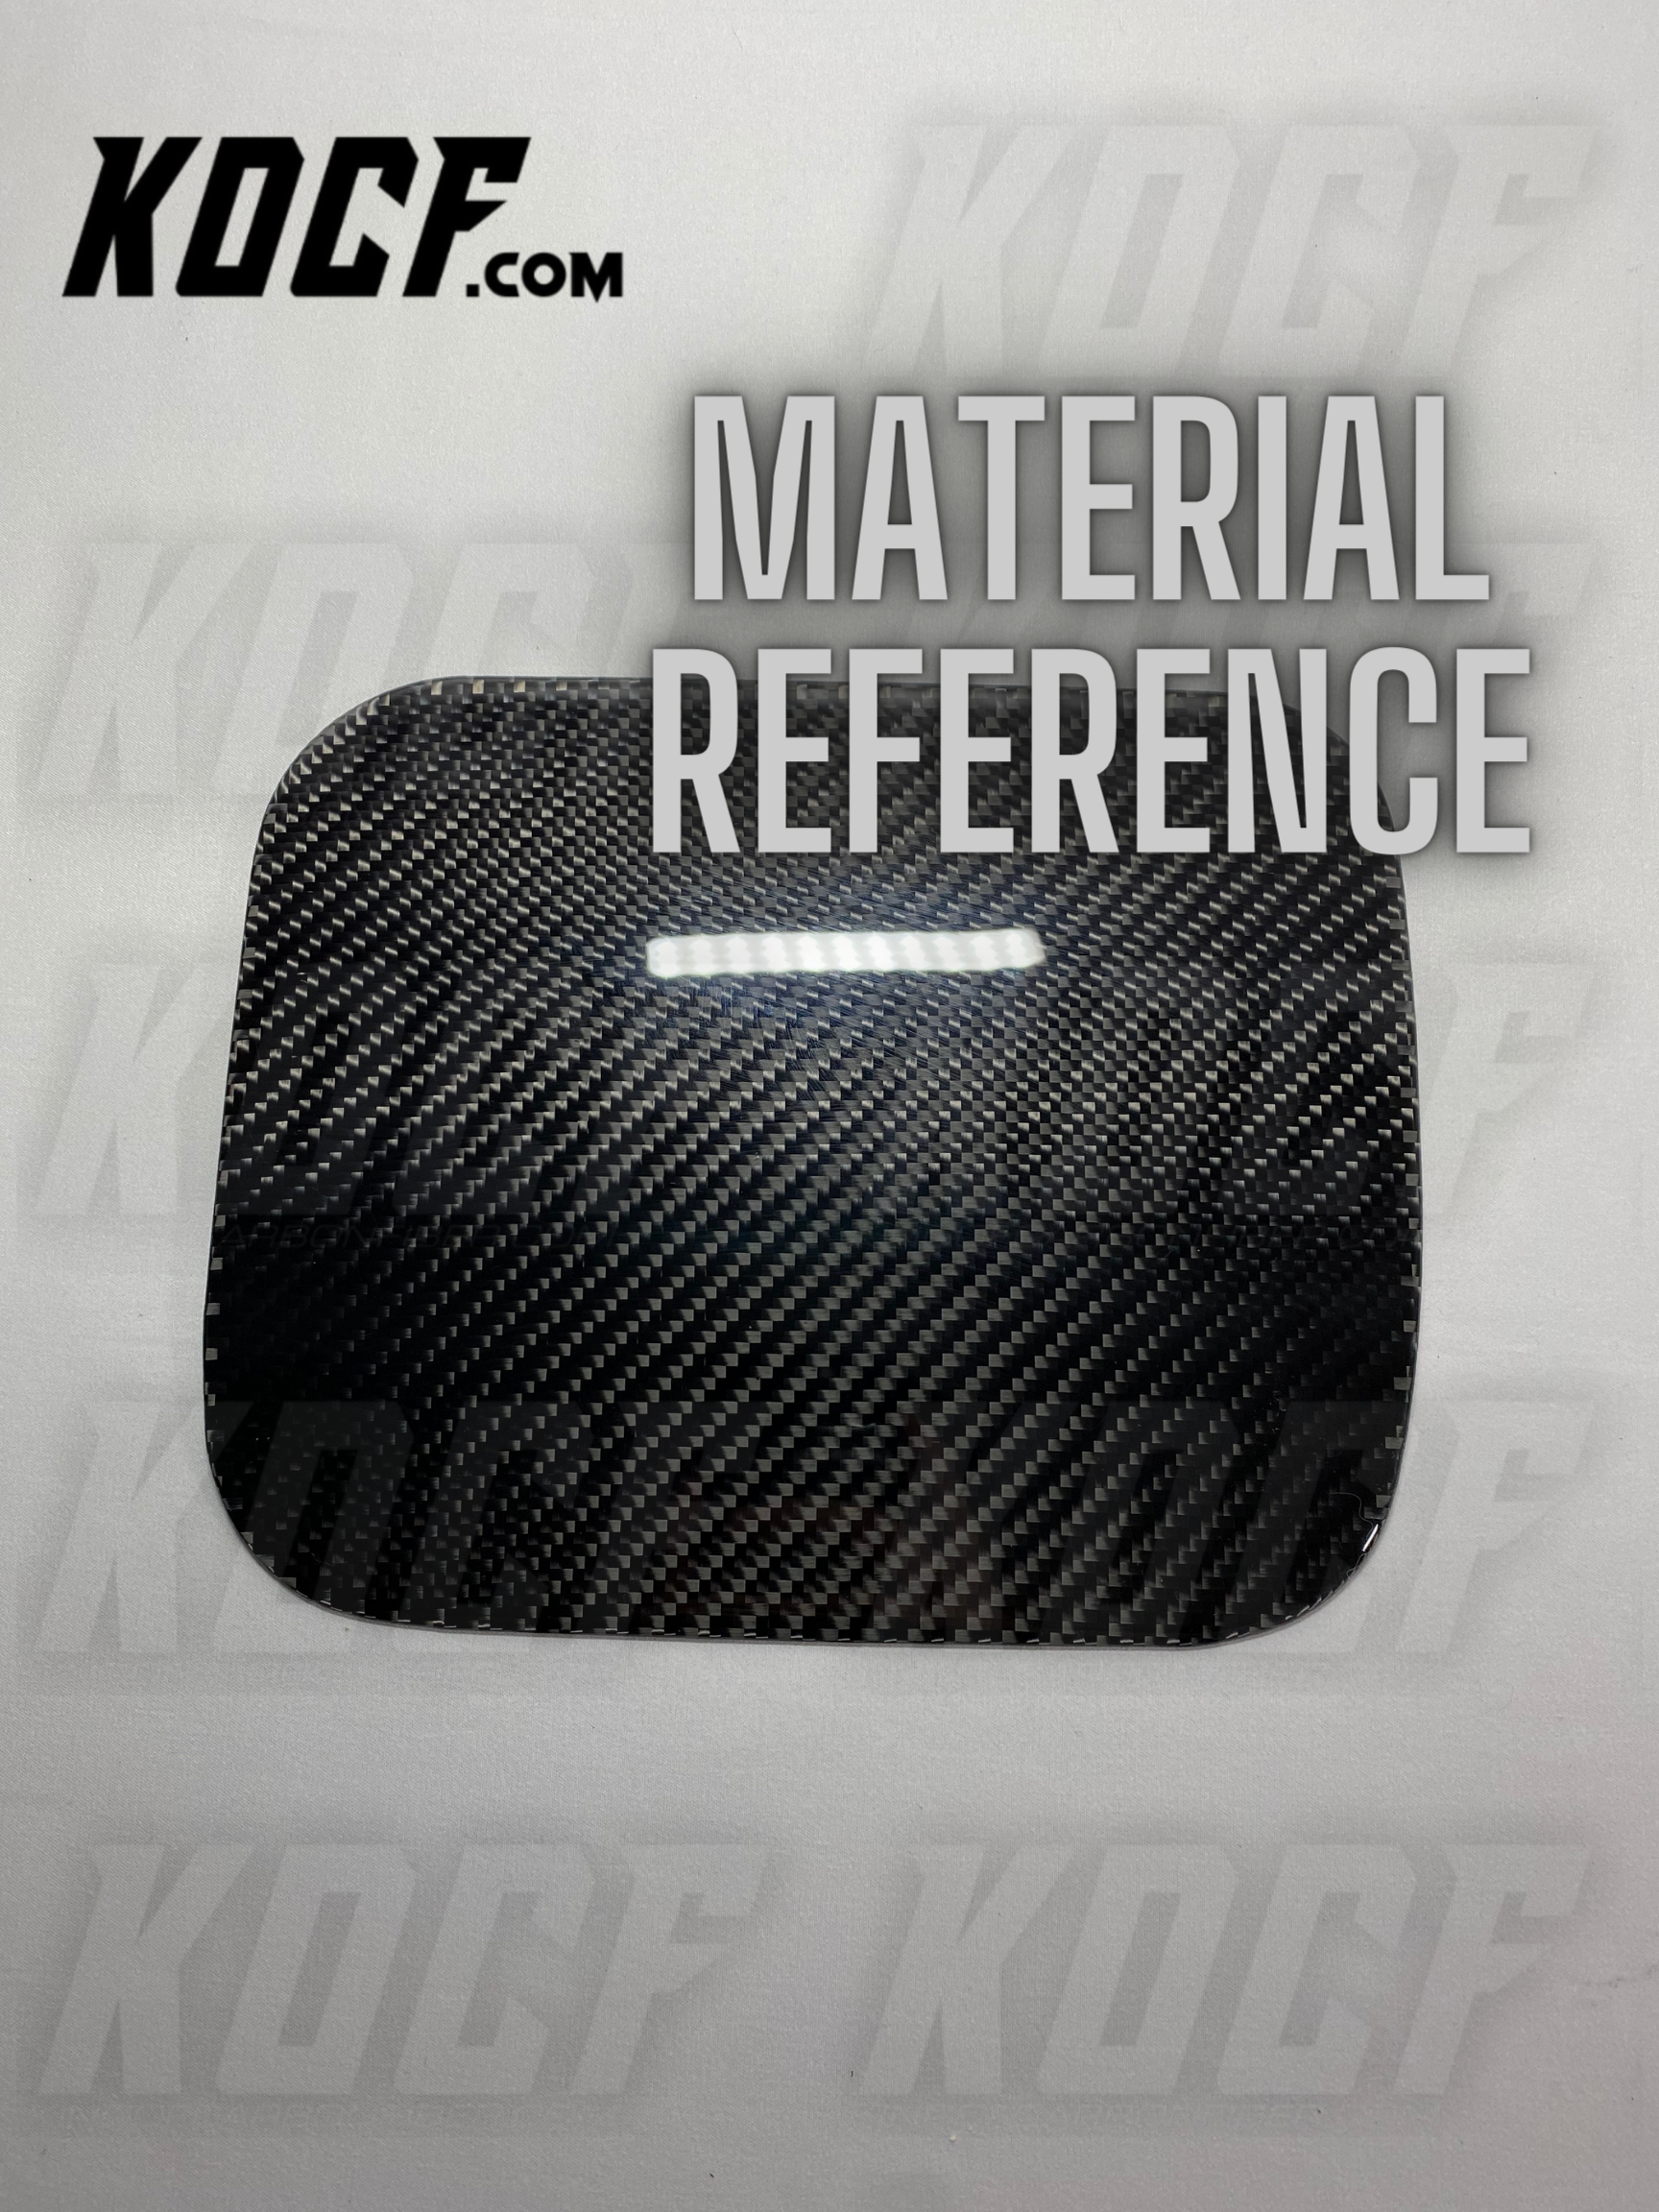 2022+ 11th Gen Civic Carbon Fiber Dash Strip Cover - KOCF.com - Car Parts